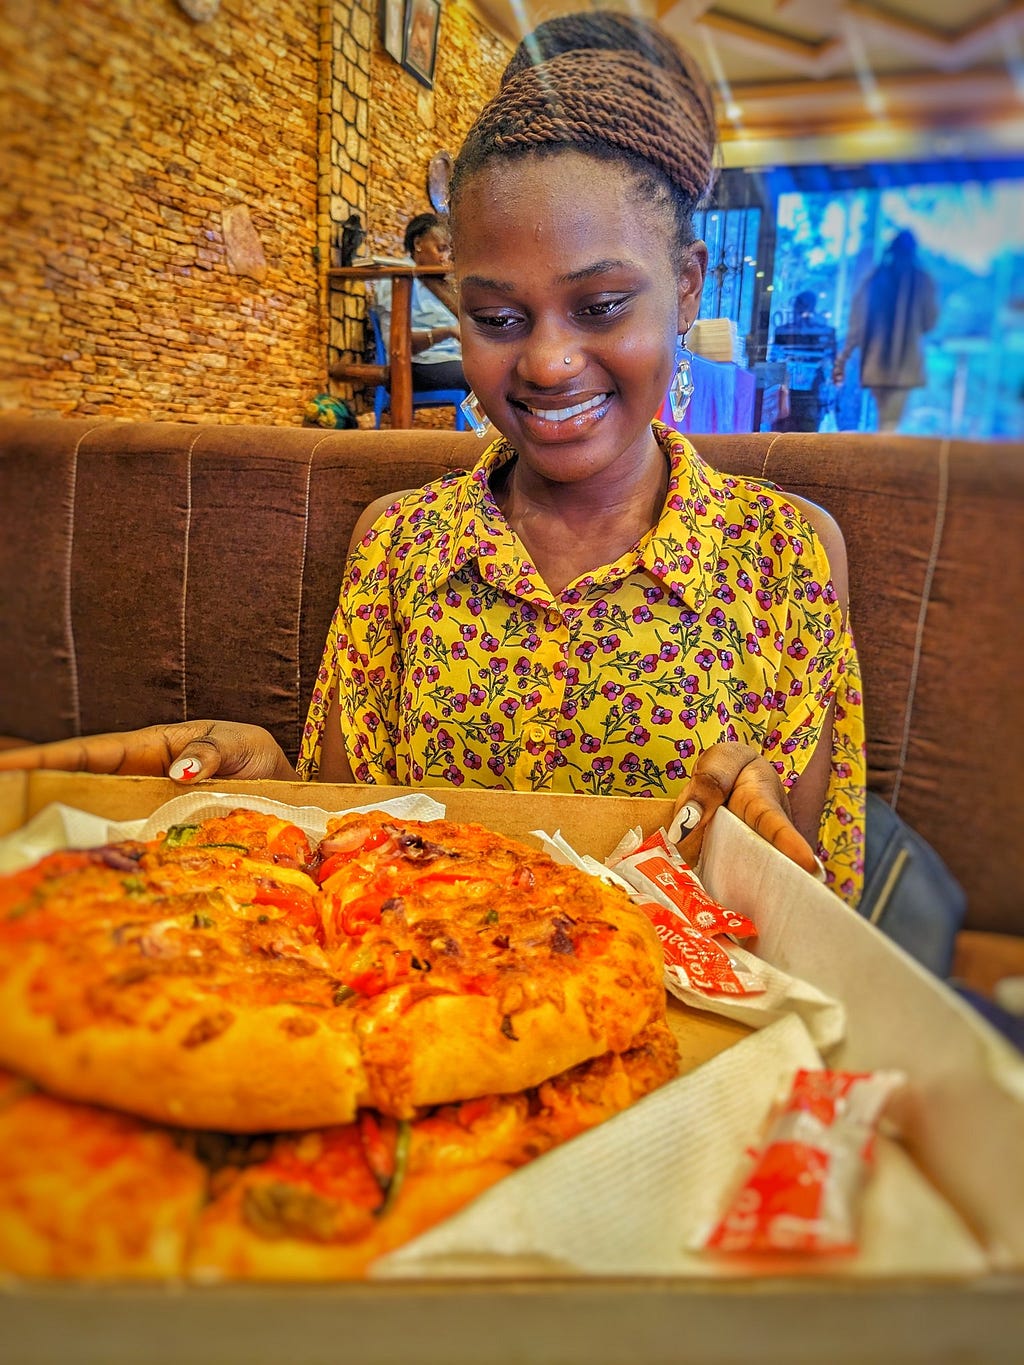 A beautiful Ugandan lady holding a carton of pizza